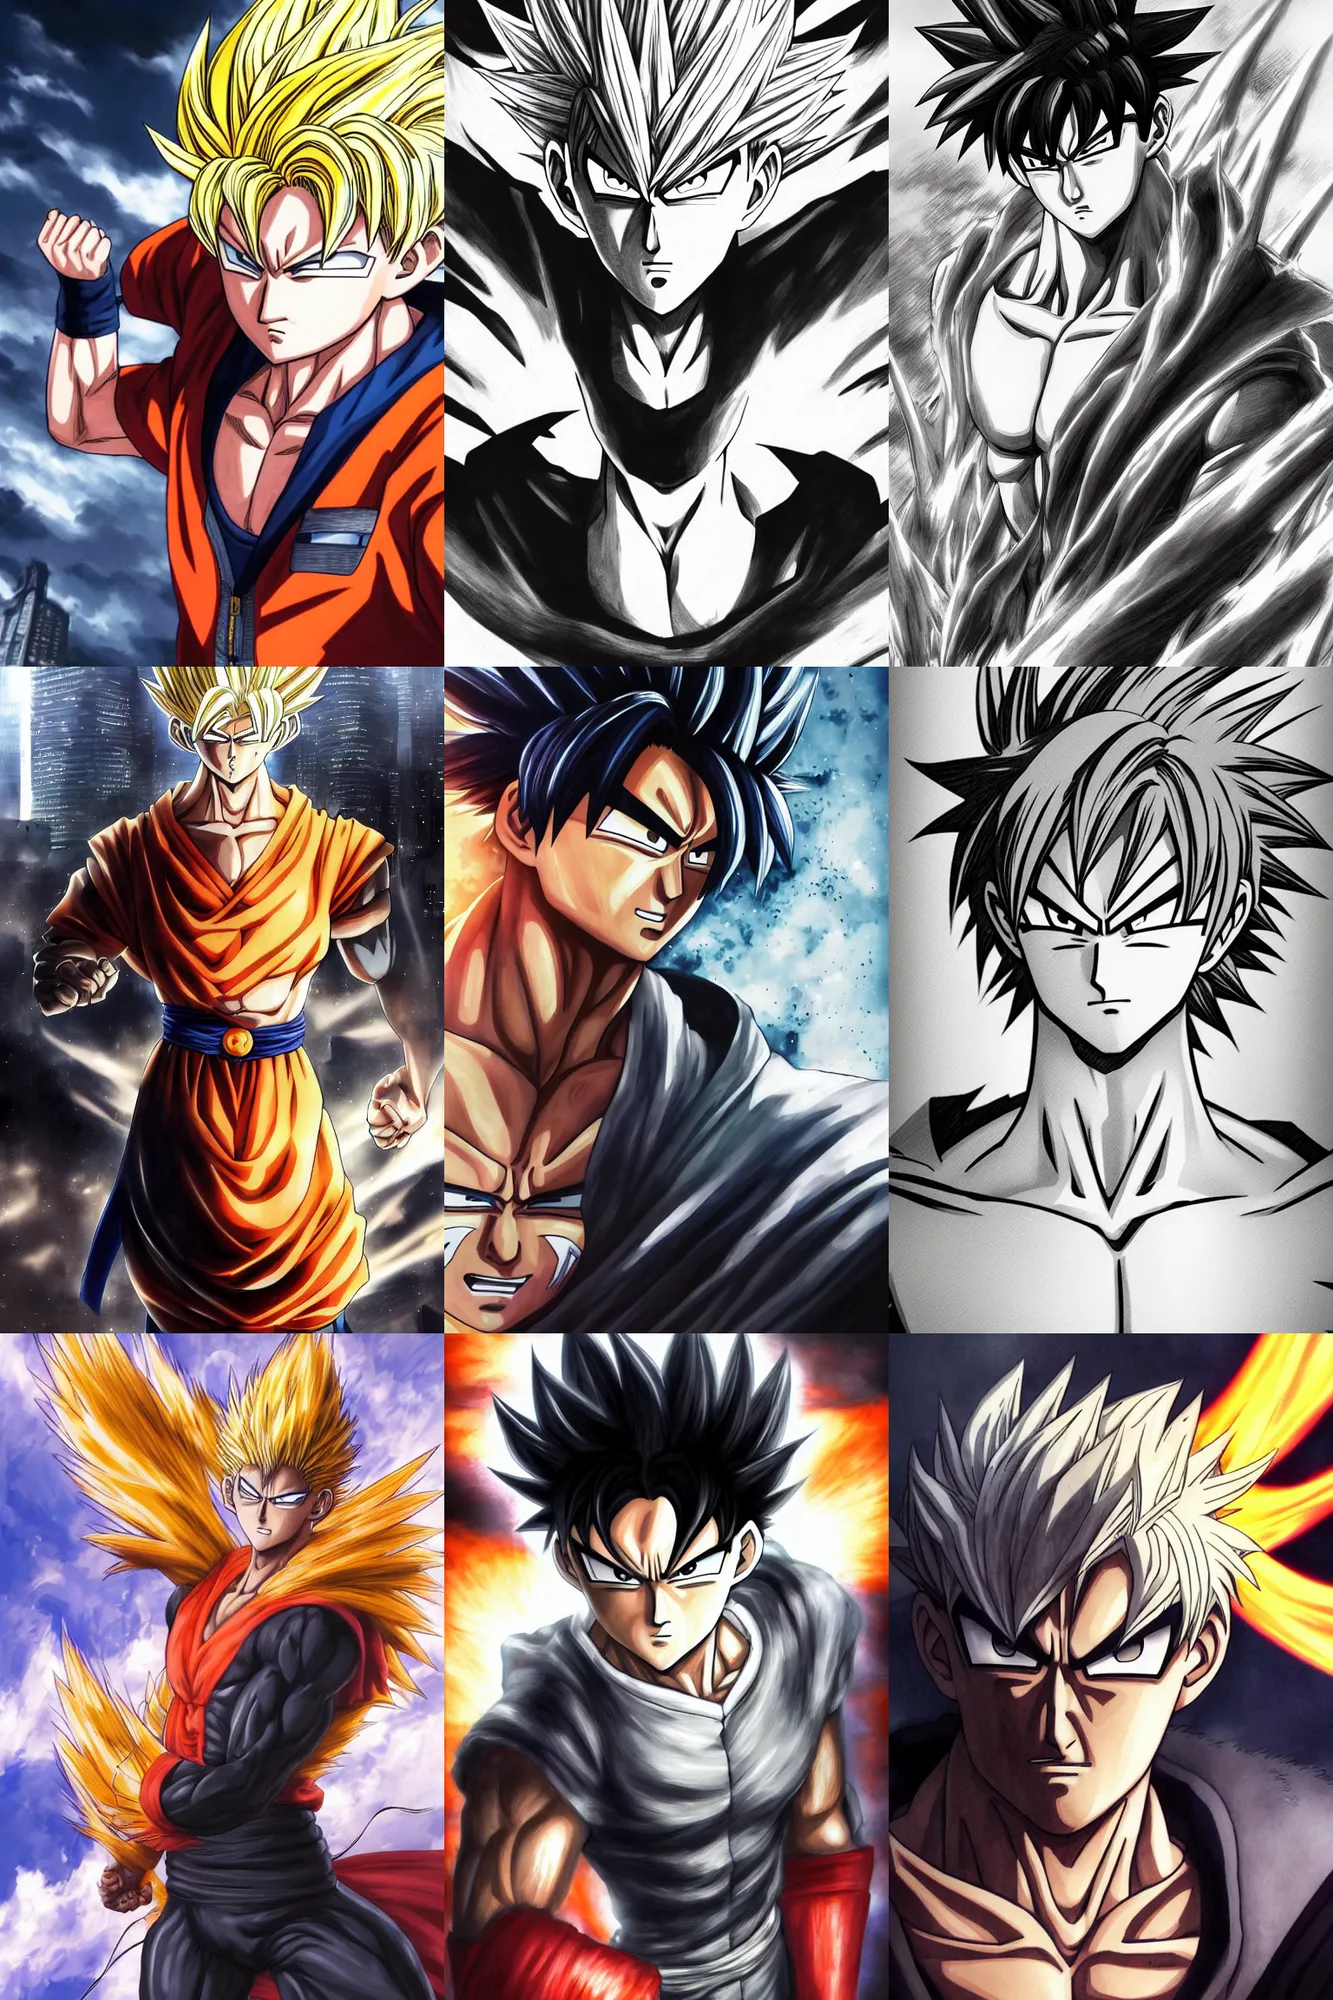 Dragon Ball Z/Super Super Saiyan Goku Fighting Stance Manga Artwork V3